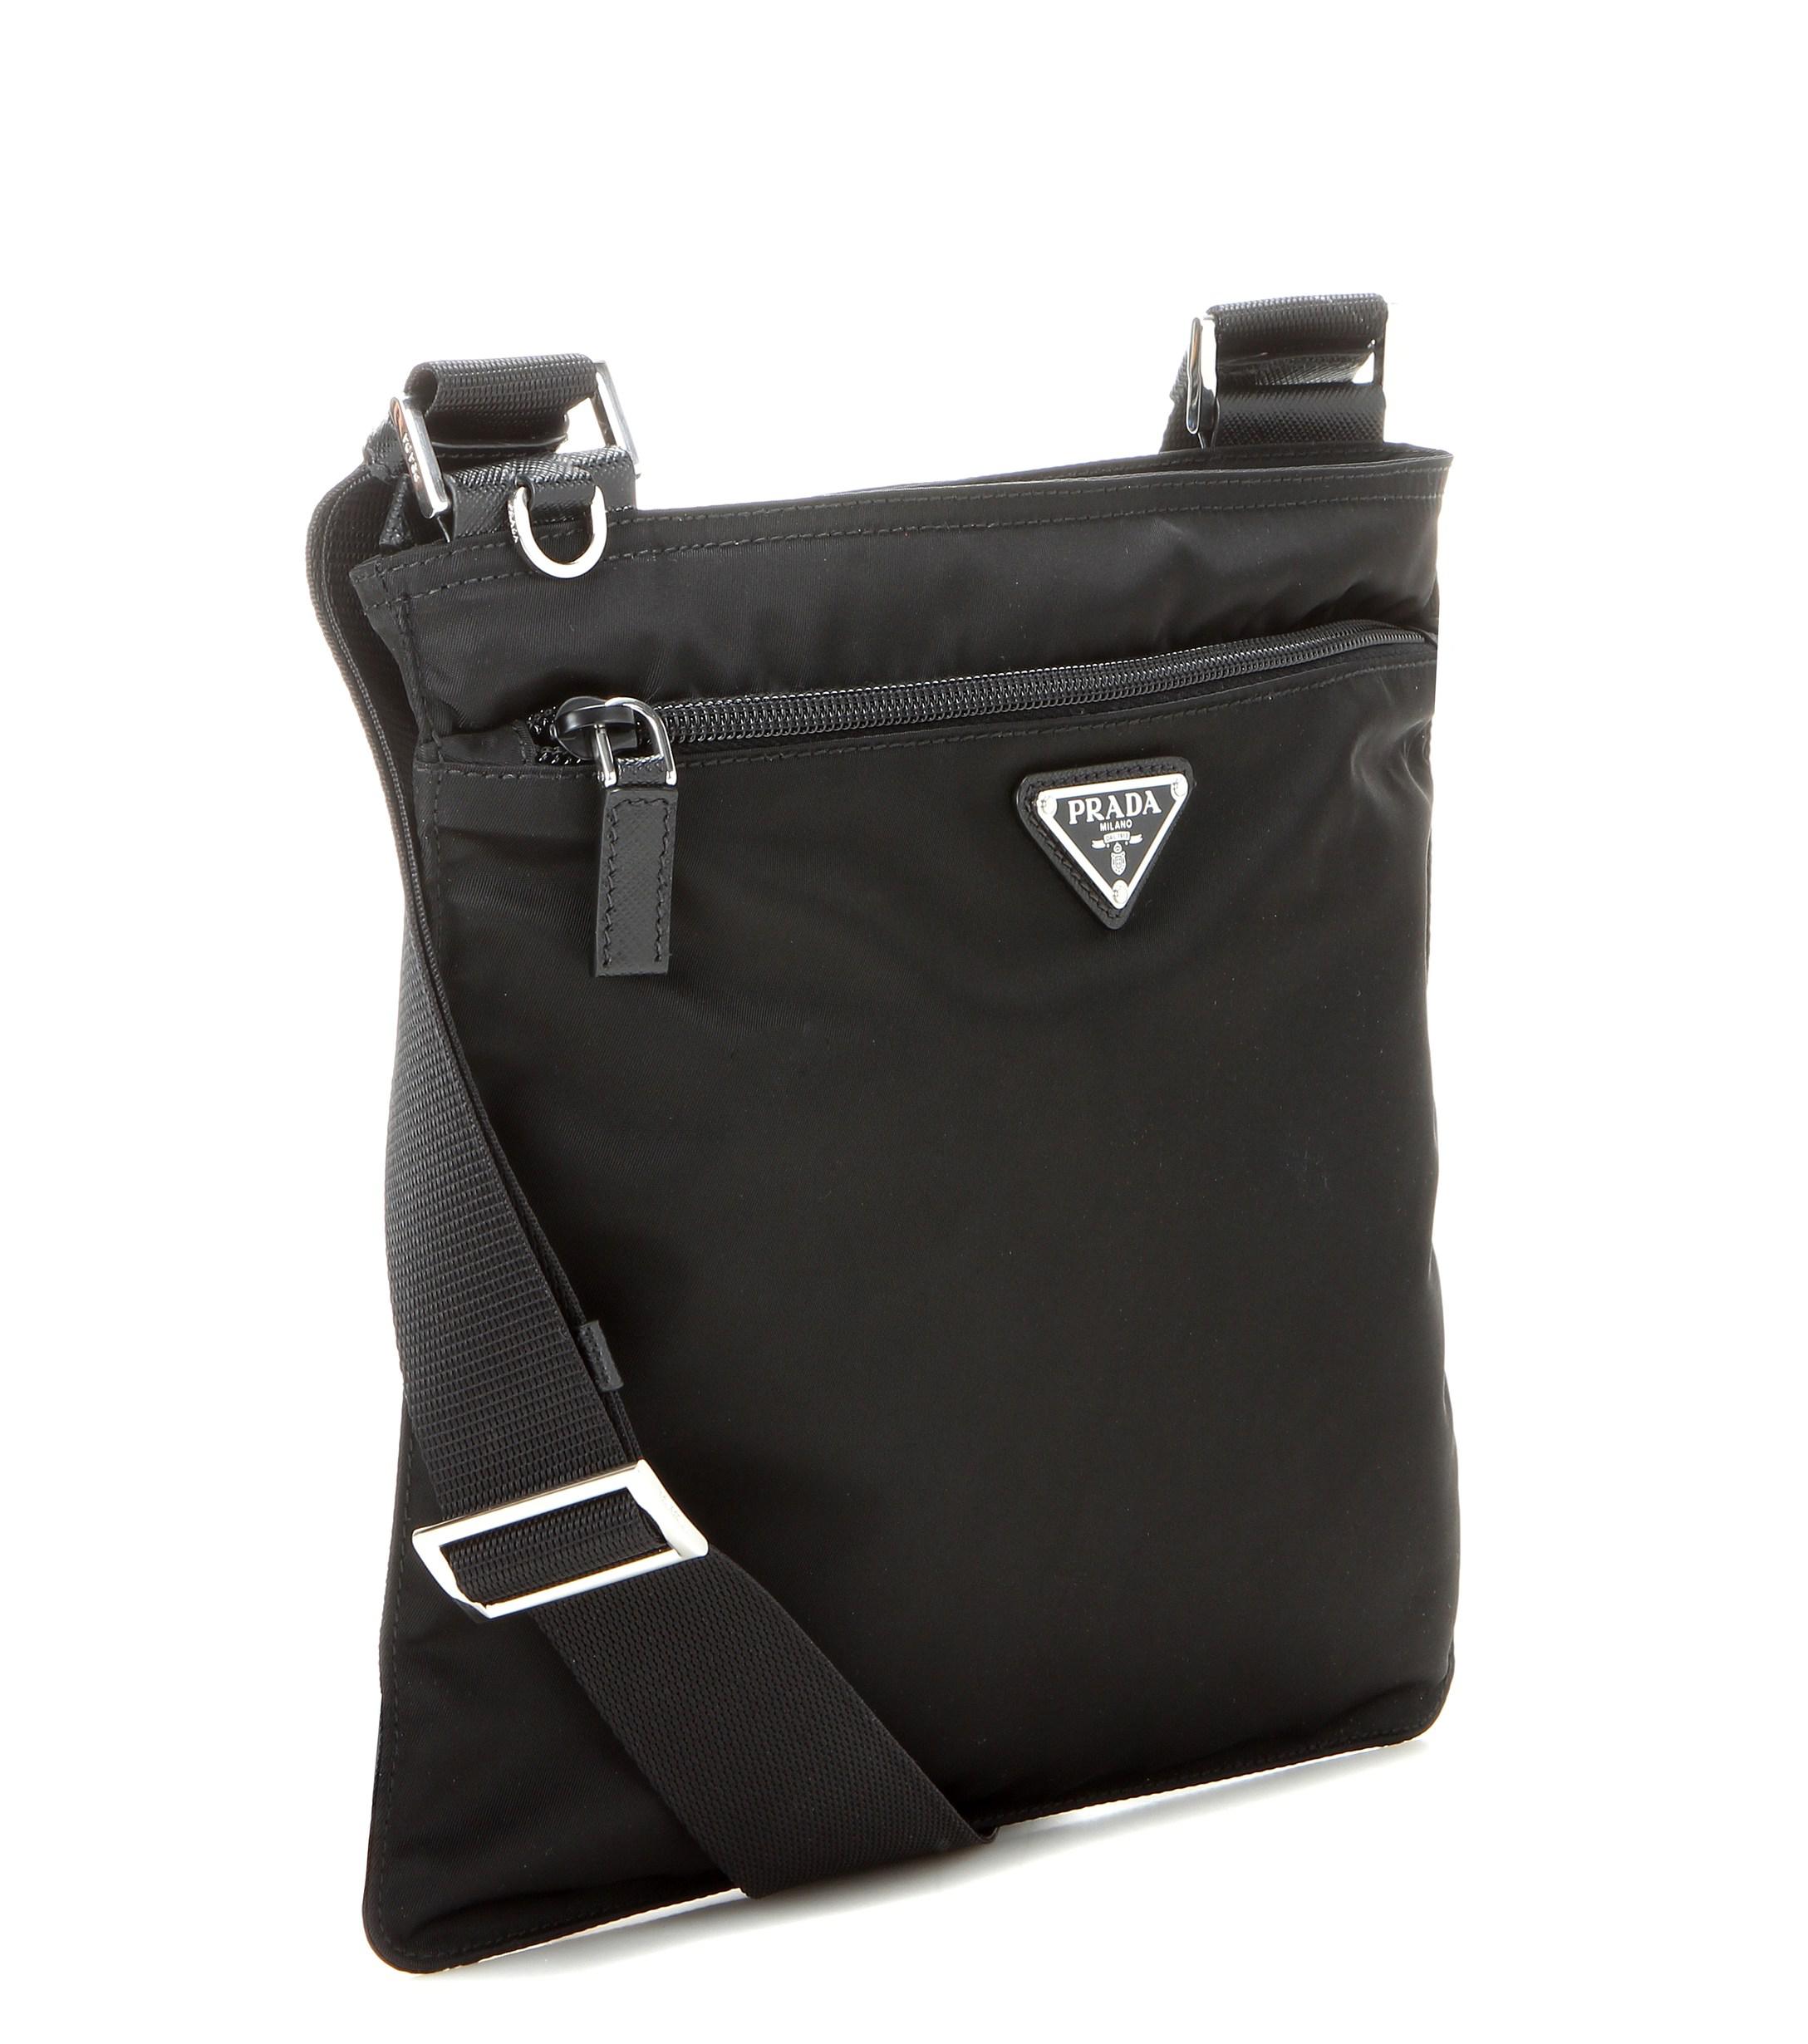 Prada Nylon Crossbody Bag in Black - Lyst